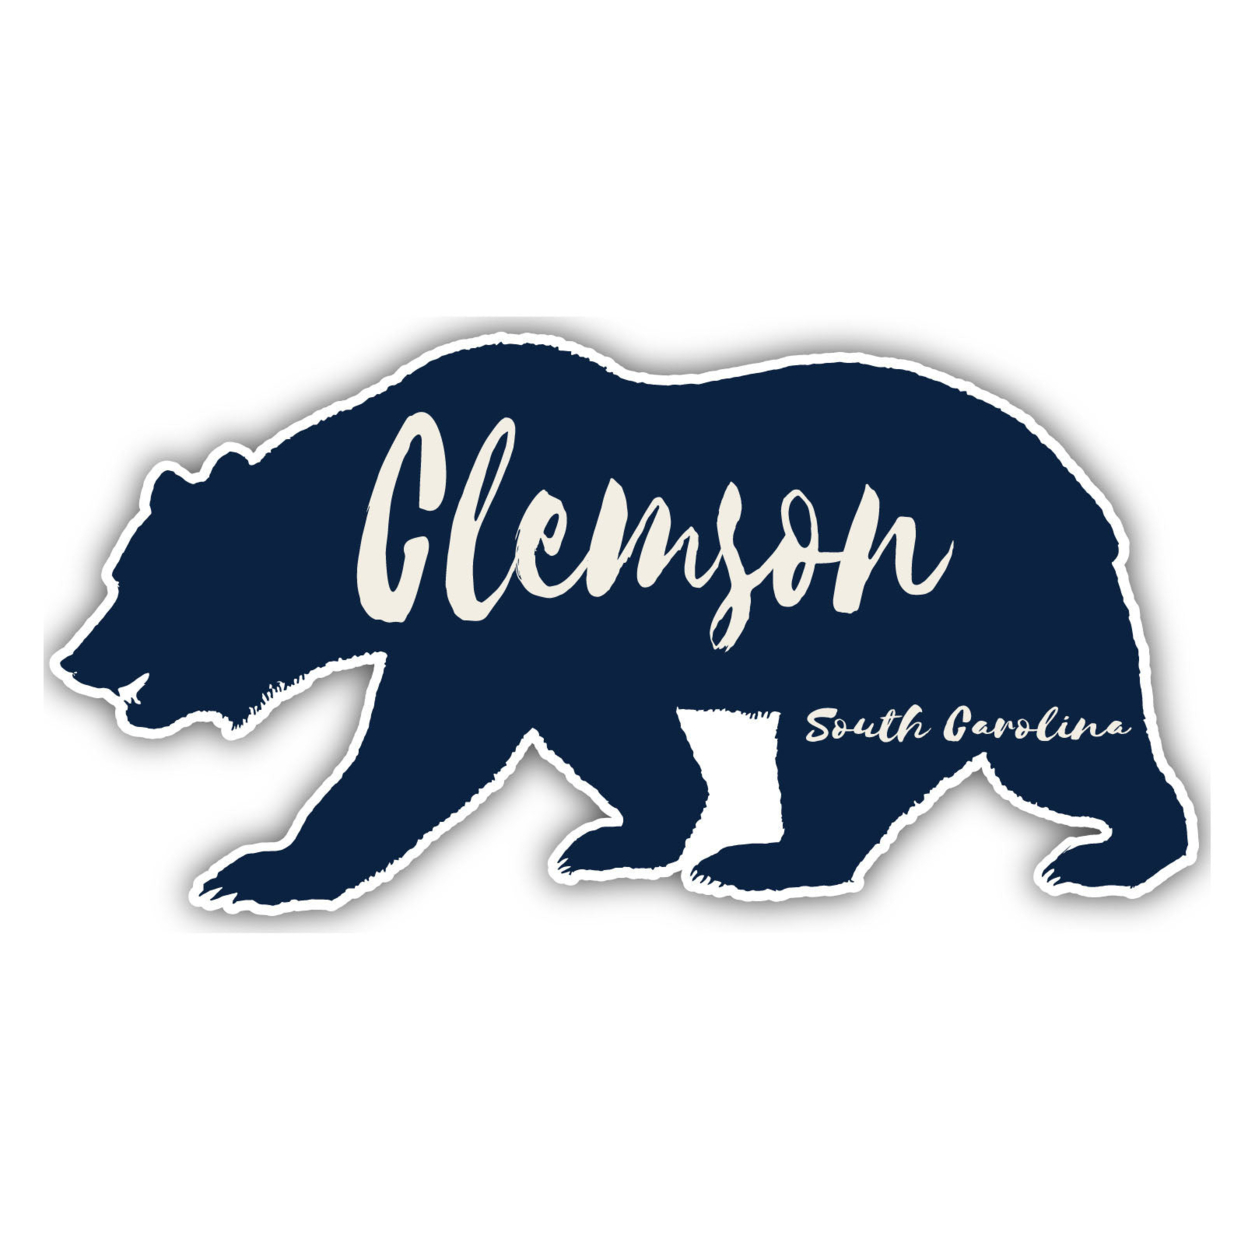 Clemson South Carolina Souvenir Decorative Stickers (Choose Theme And Size) - Single Unit, 12-Inch, Camp Life